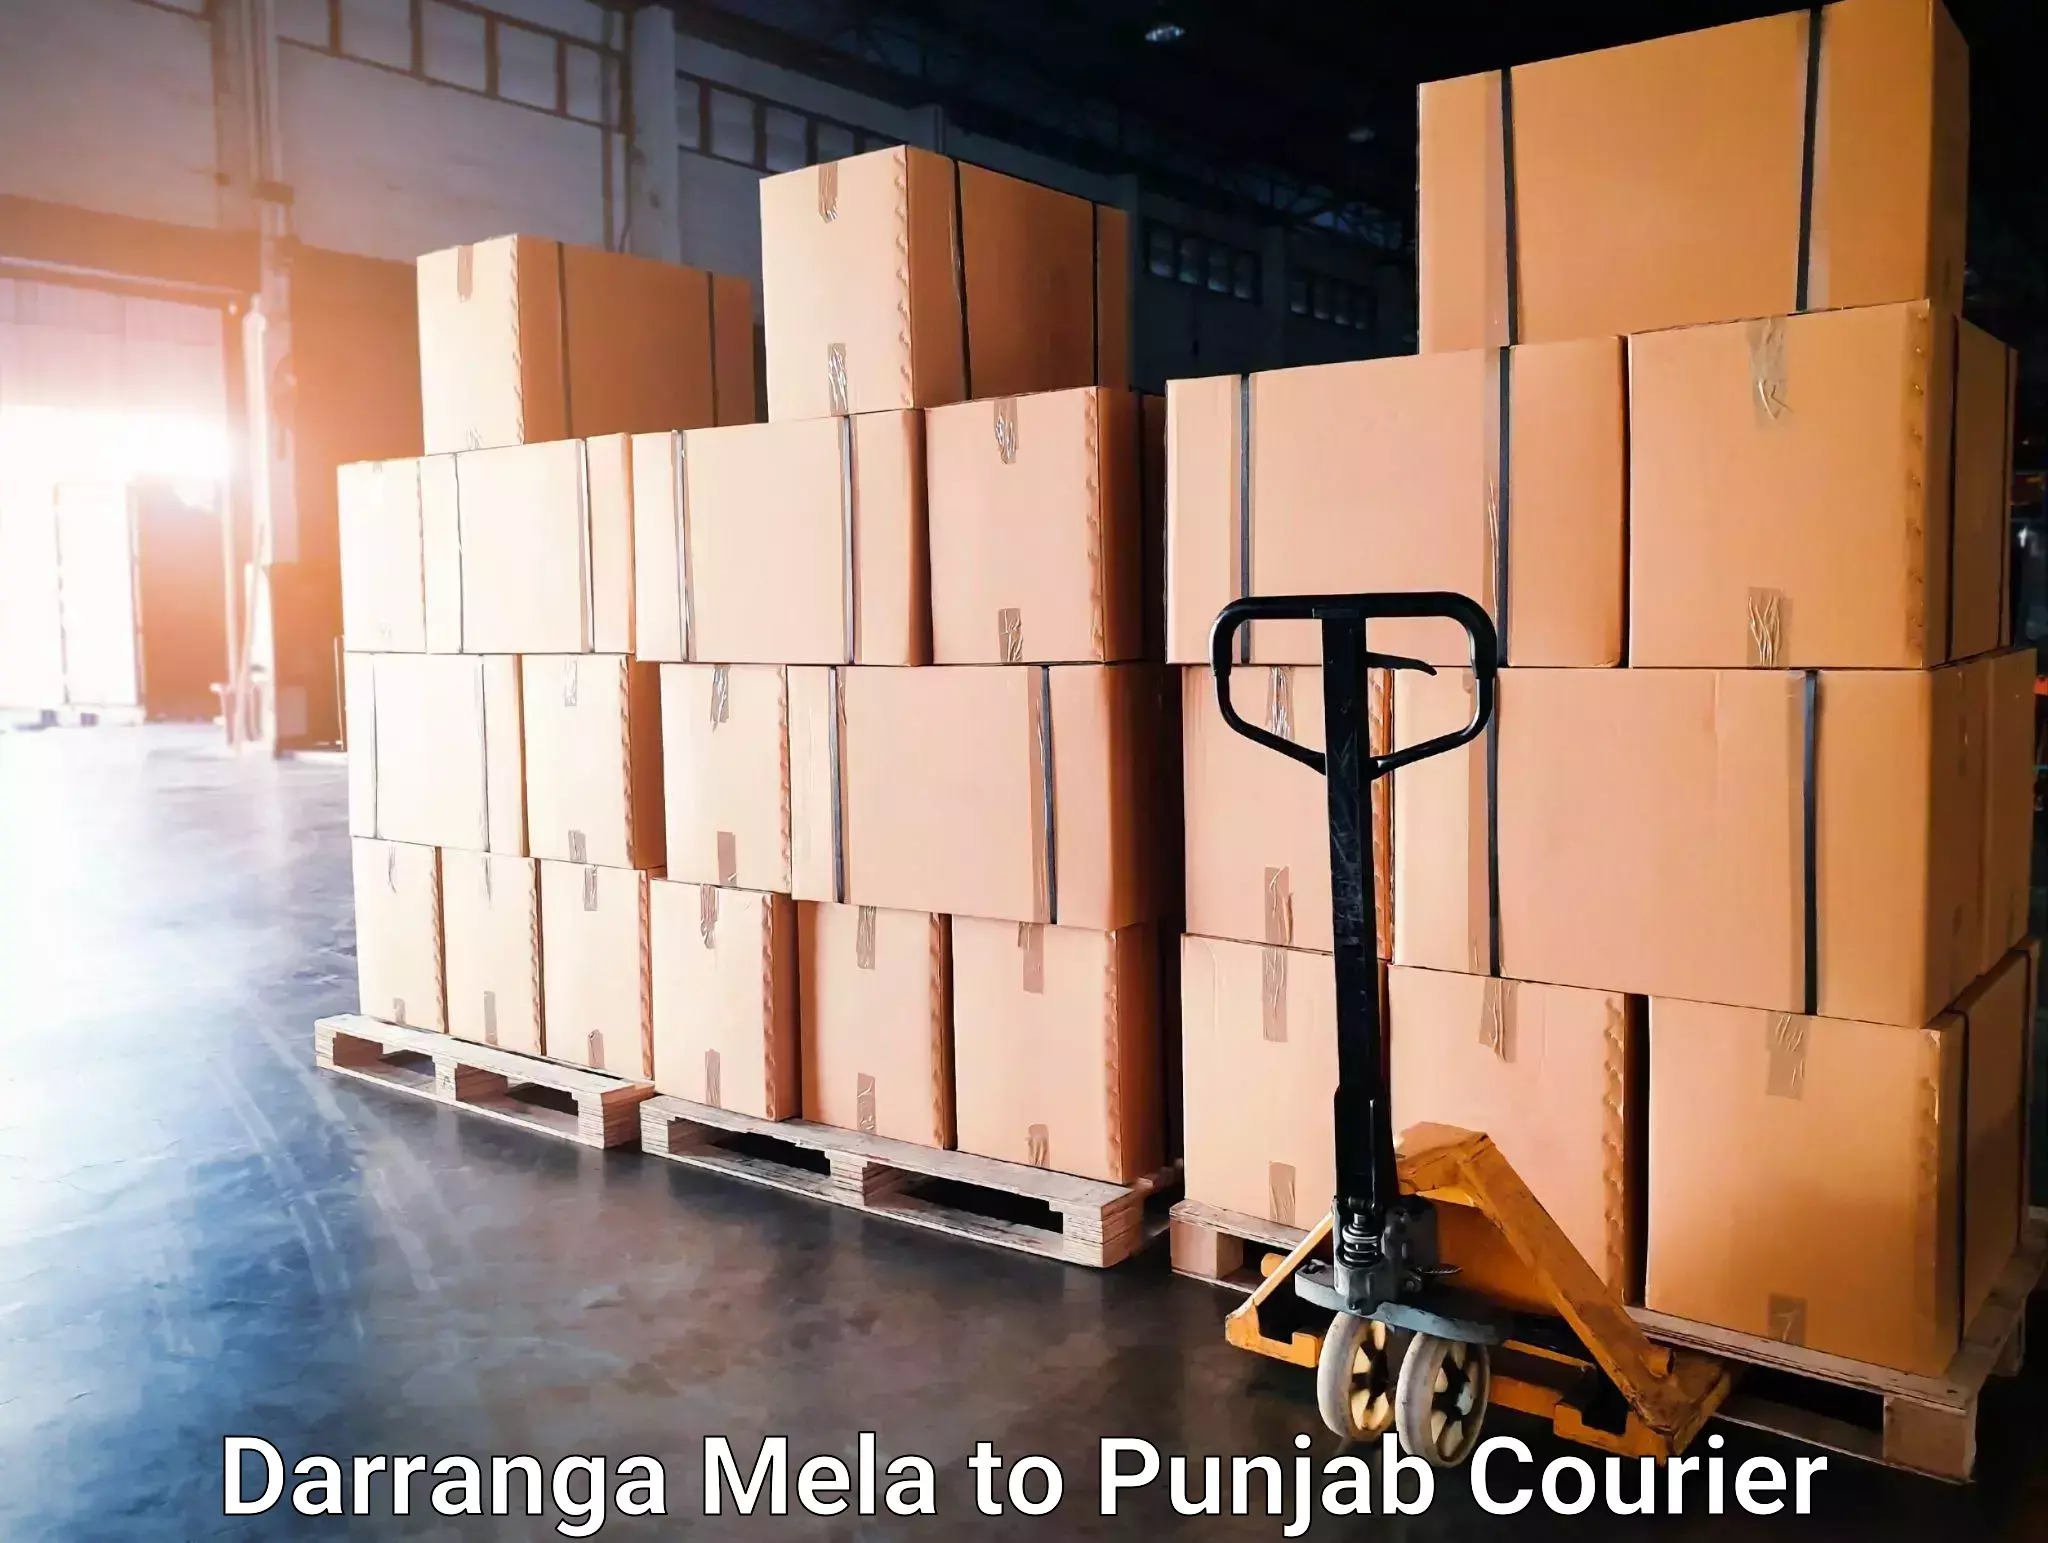 Courier service partnerships in Darranga Mela to Nawanshahr